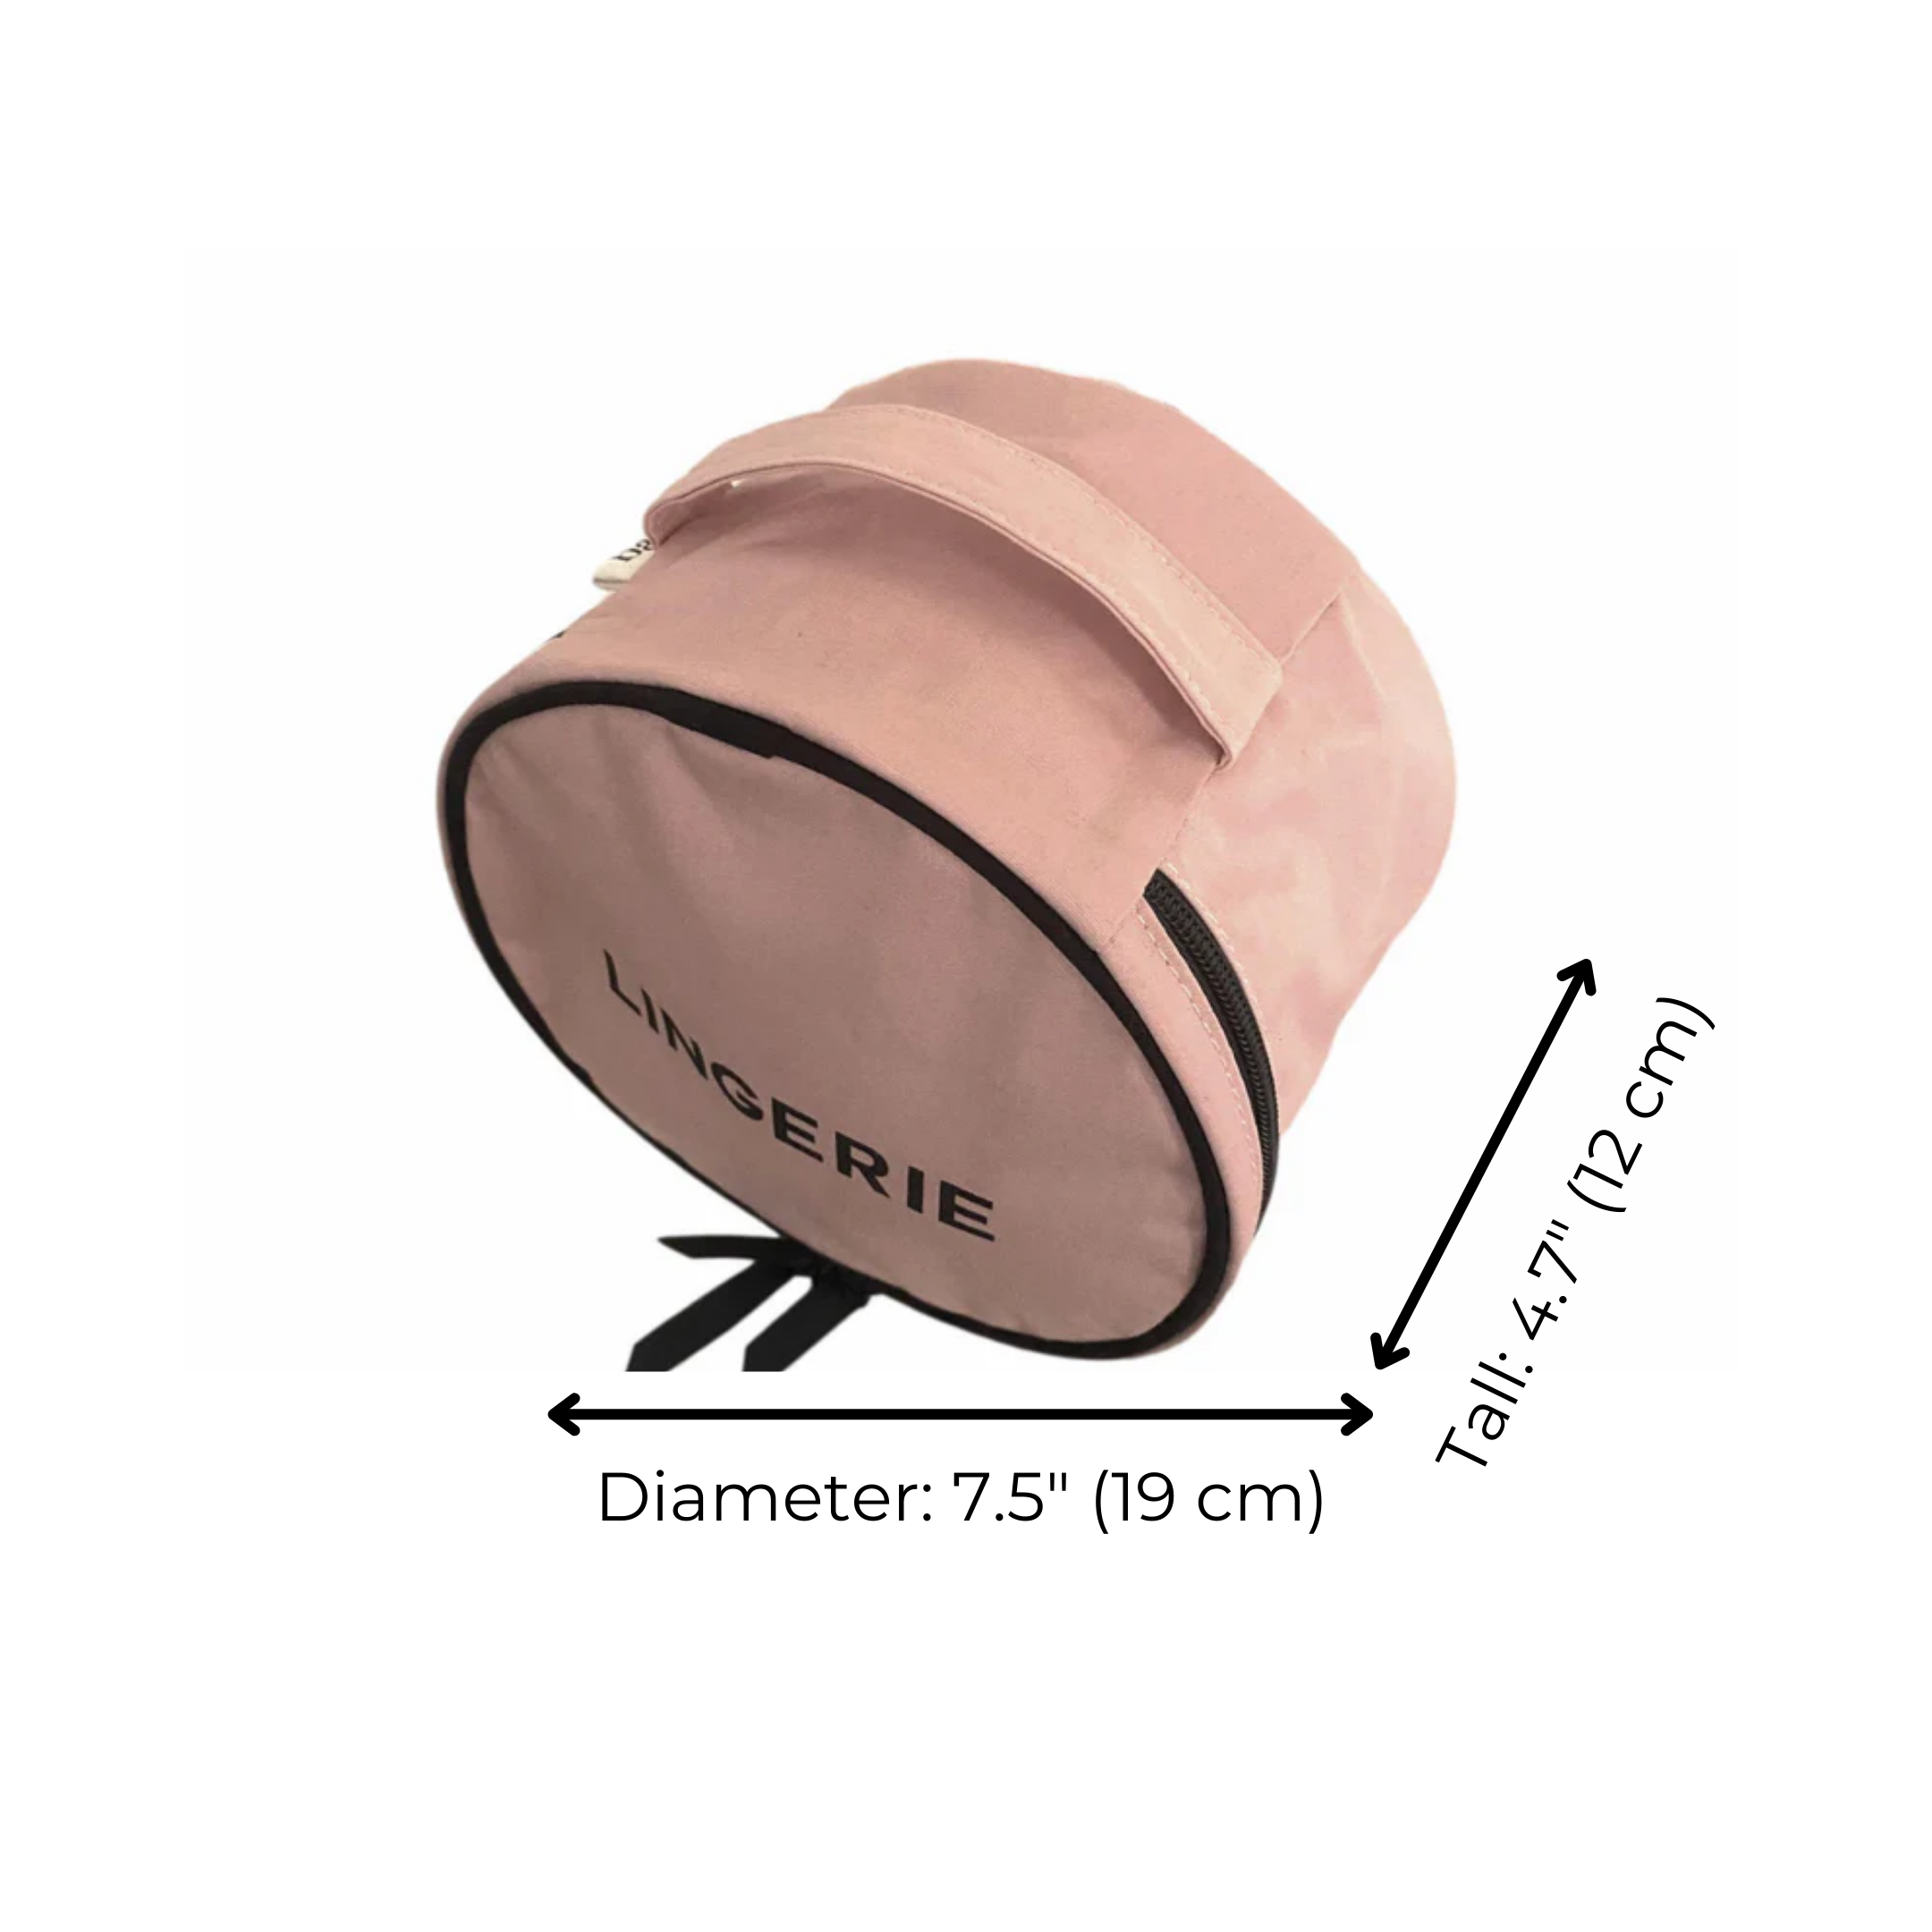 Round Lingerie Case, Pink/Blush | Bag-all